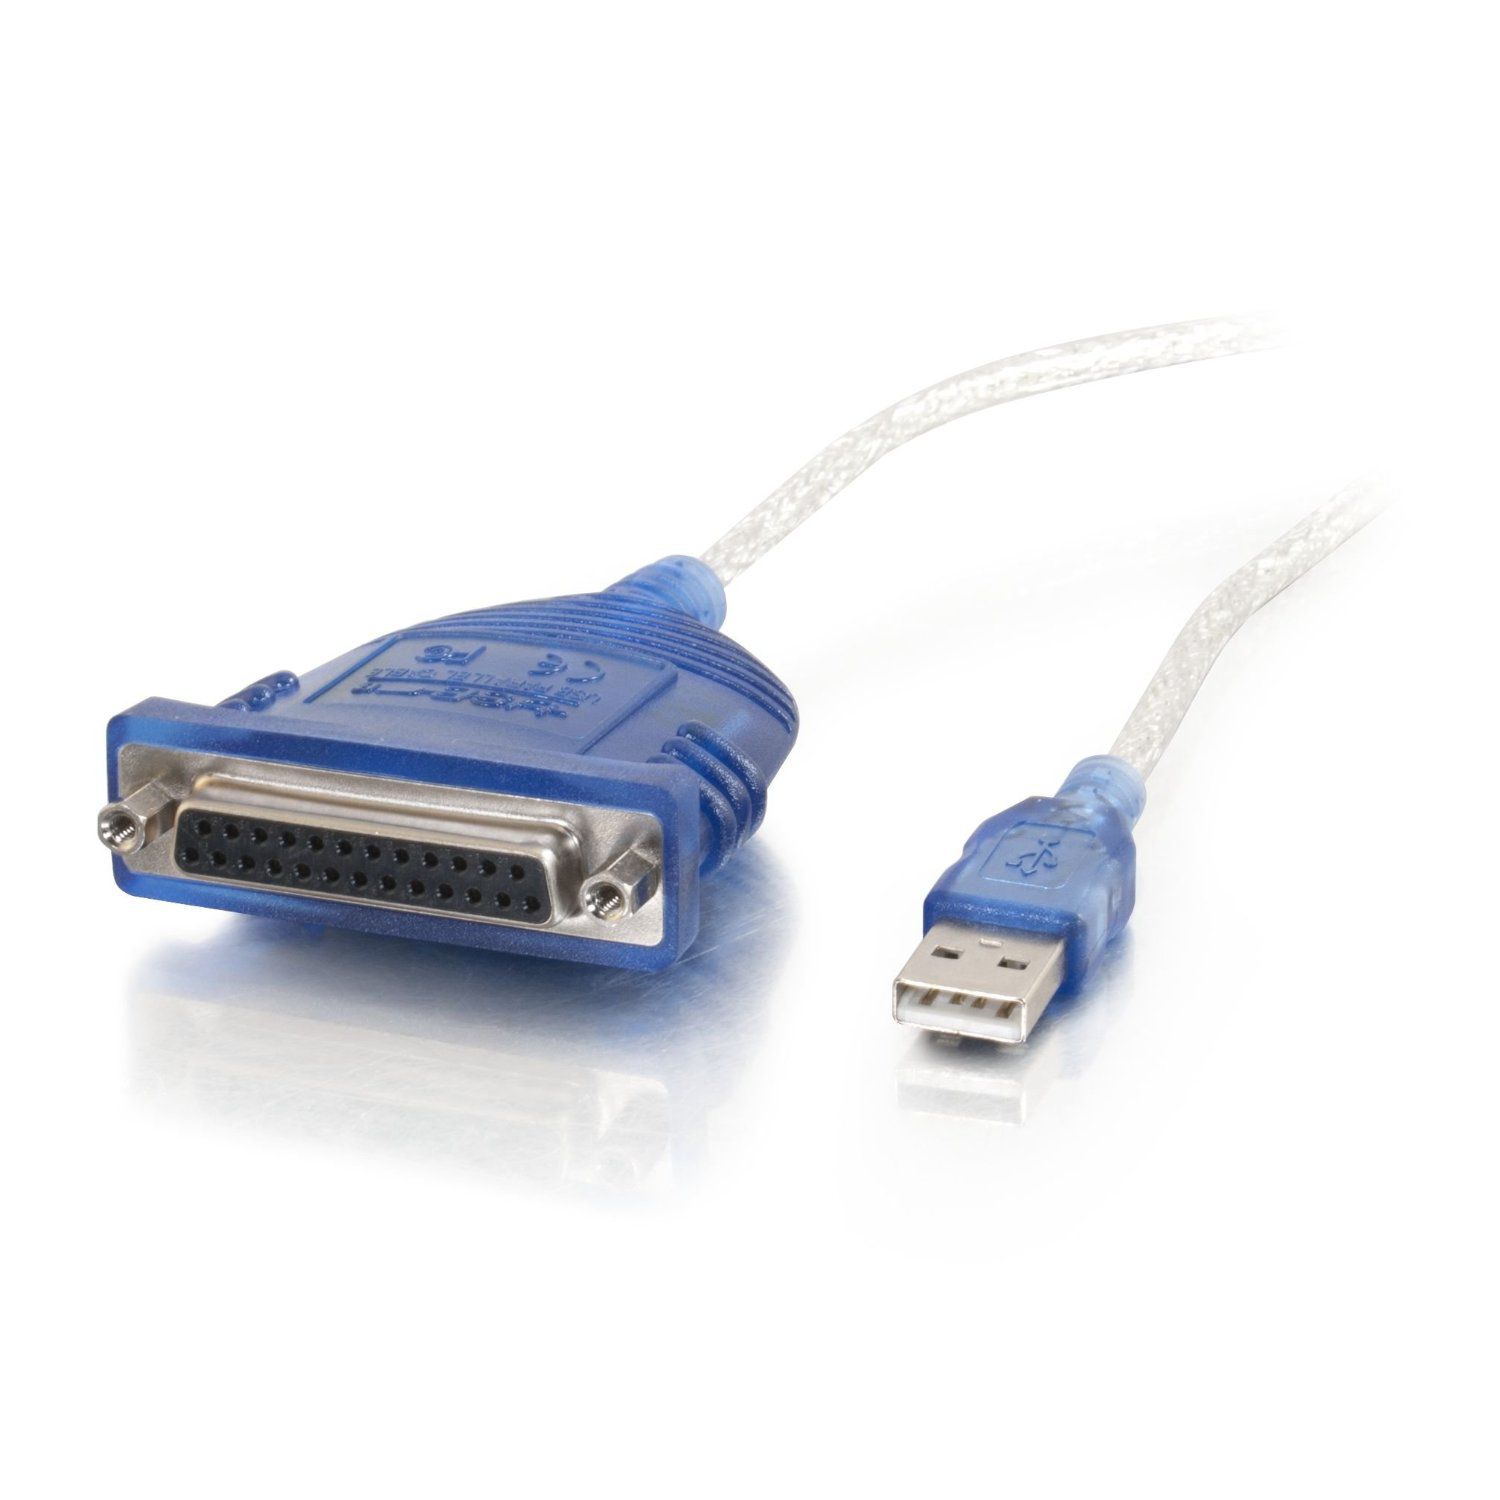 USB 1284 DB25 PARALLEL PRINTER ADPTR